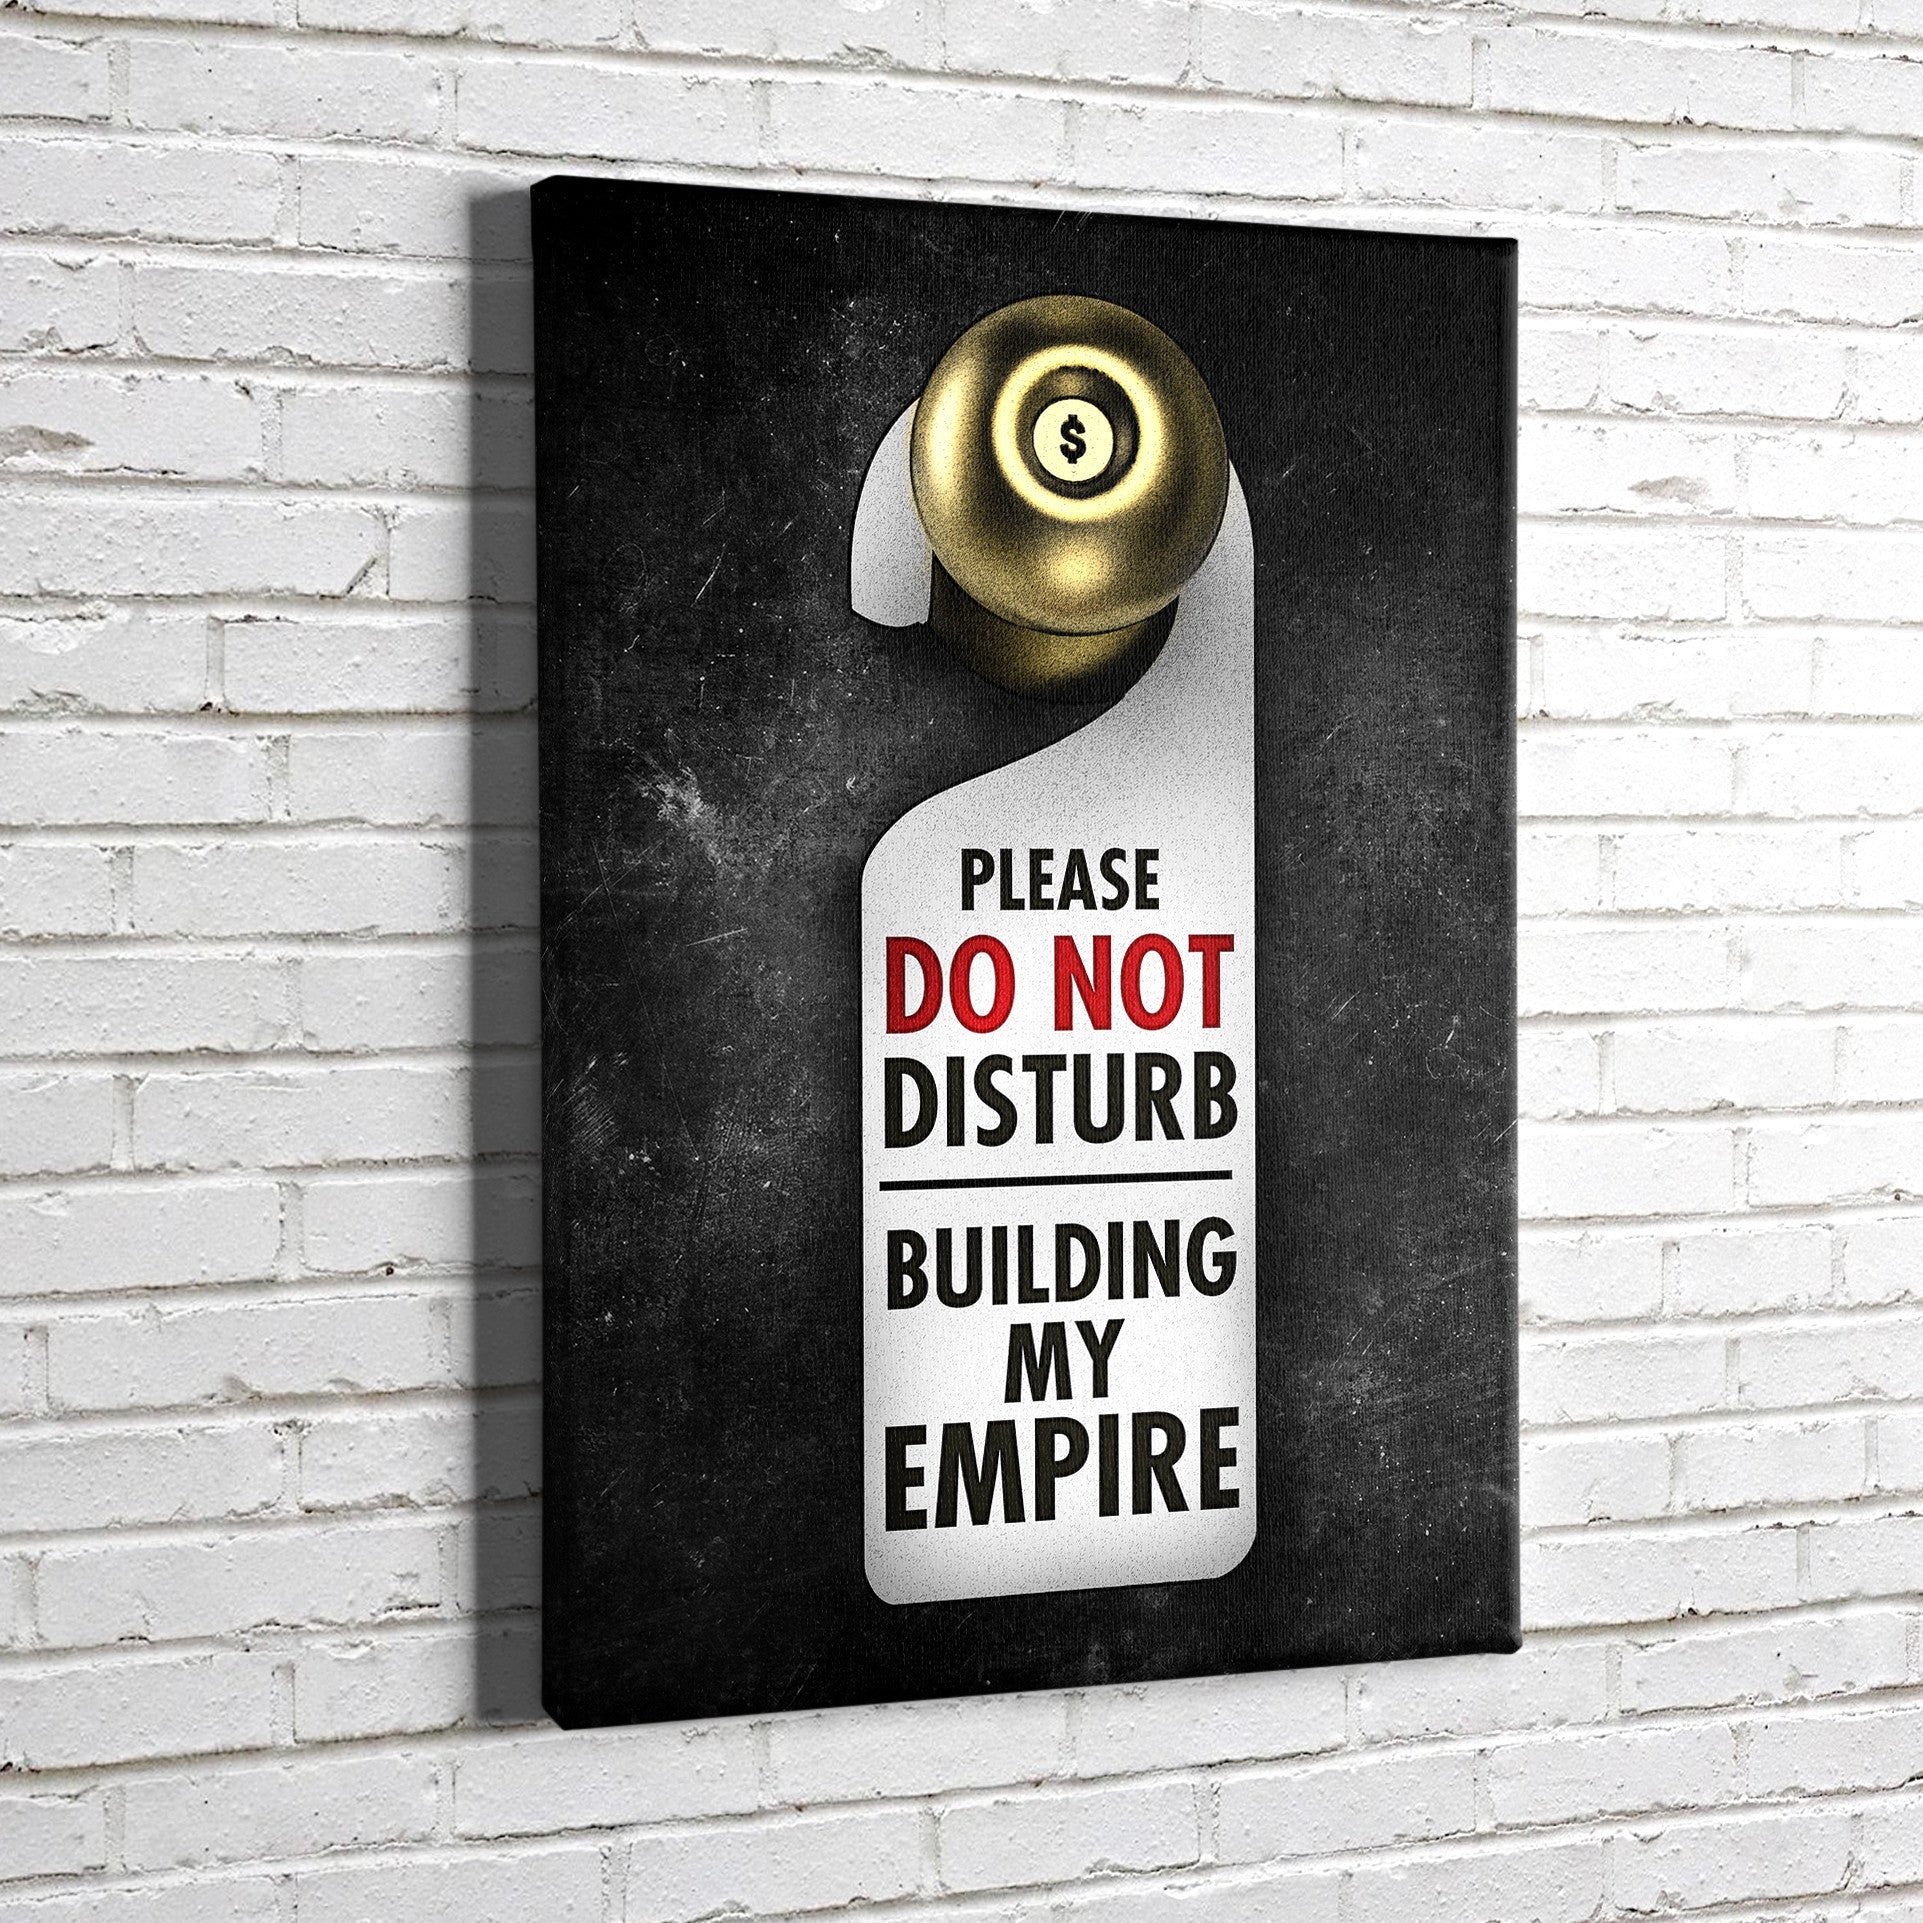 Build an Empire Motivational Canvas Wall Art, Office Decor, Motivational  Wall Decor, Success Quotes 